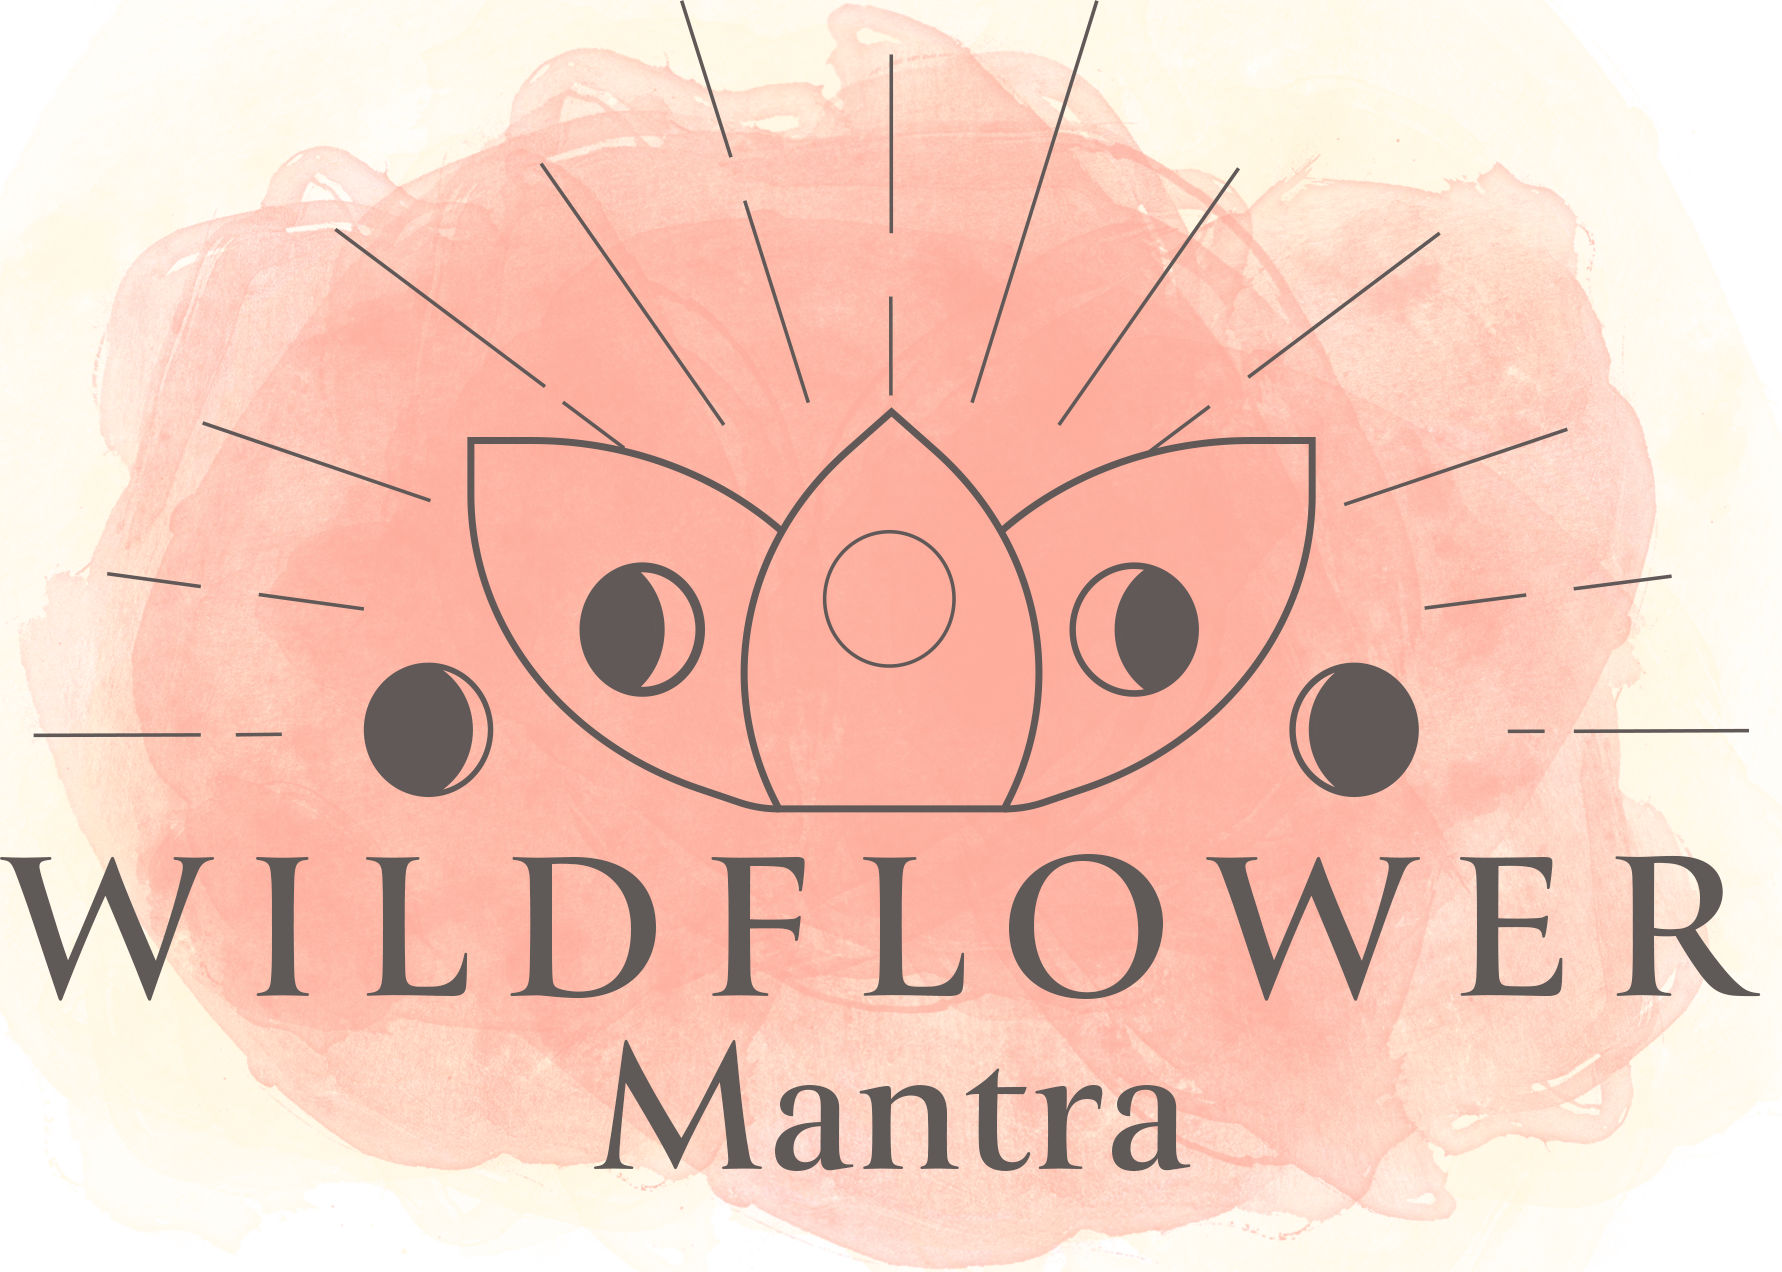 wildflower mantra logo